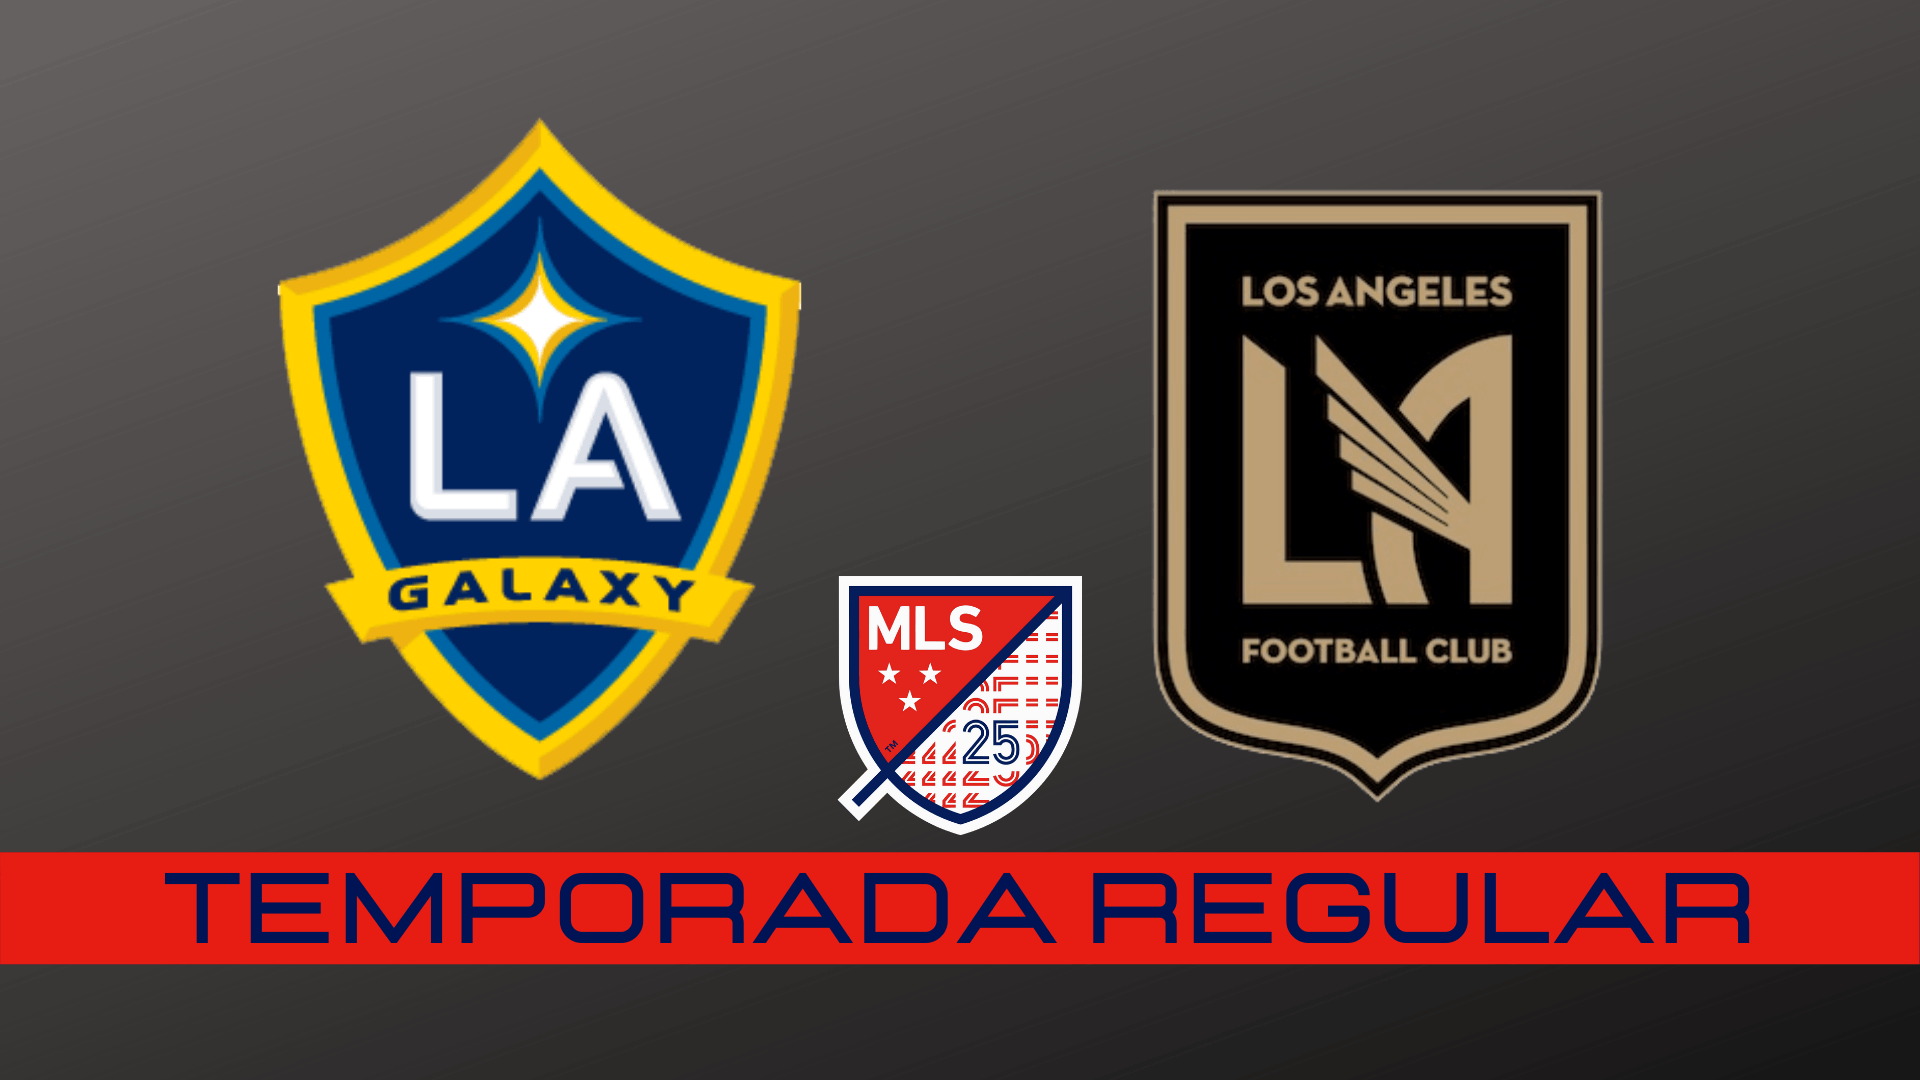 LA Galaxy - O clube americano de futebol que está fazendo fama no mundo